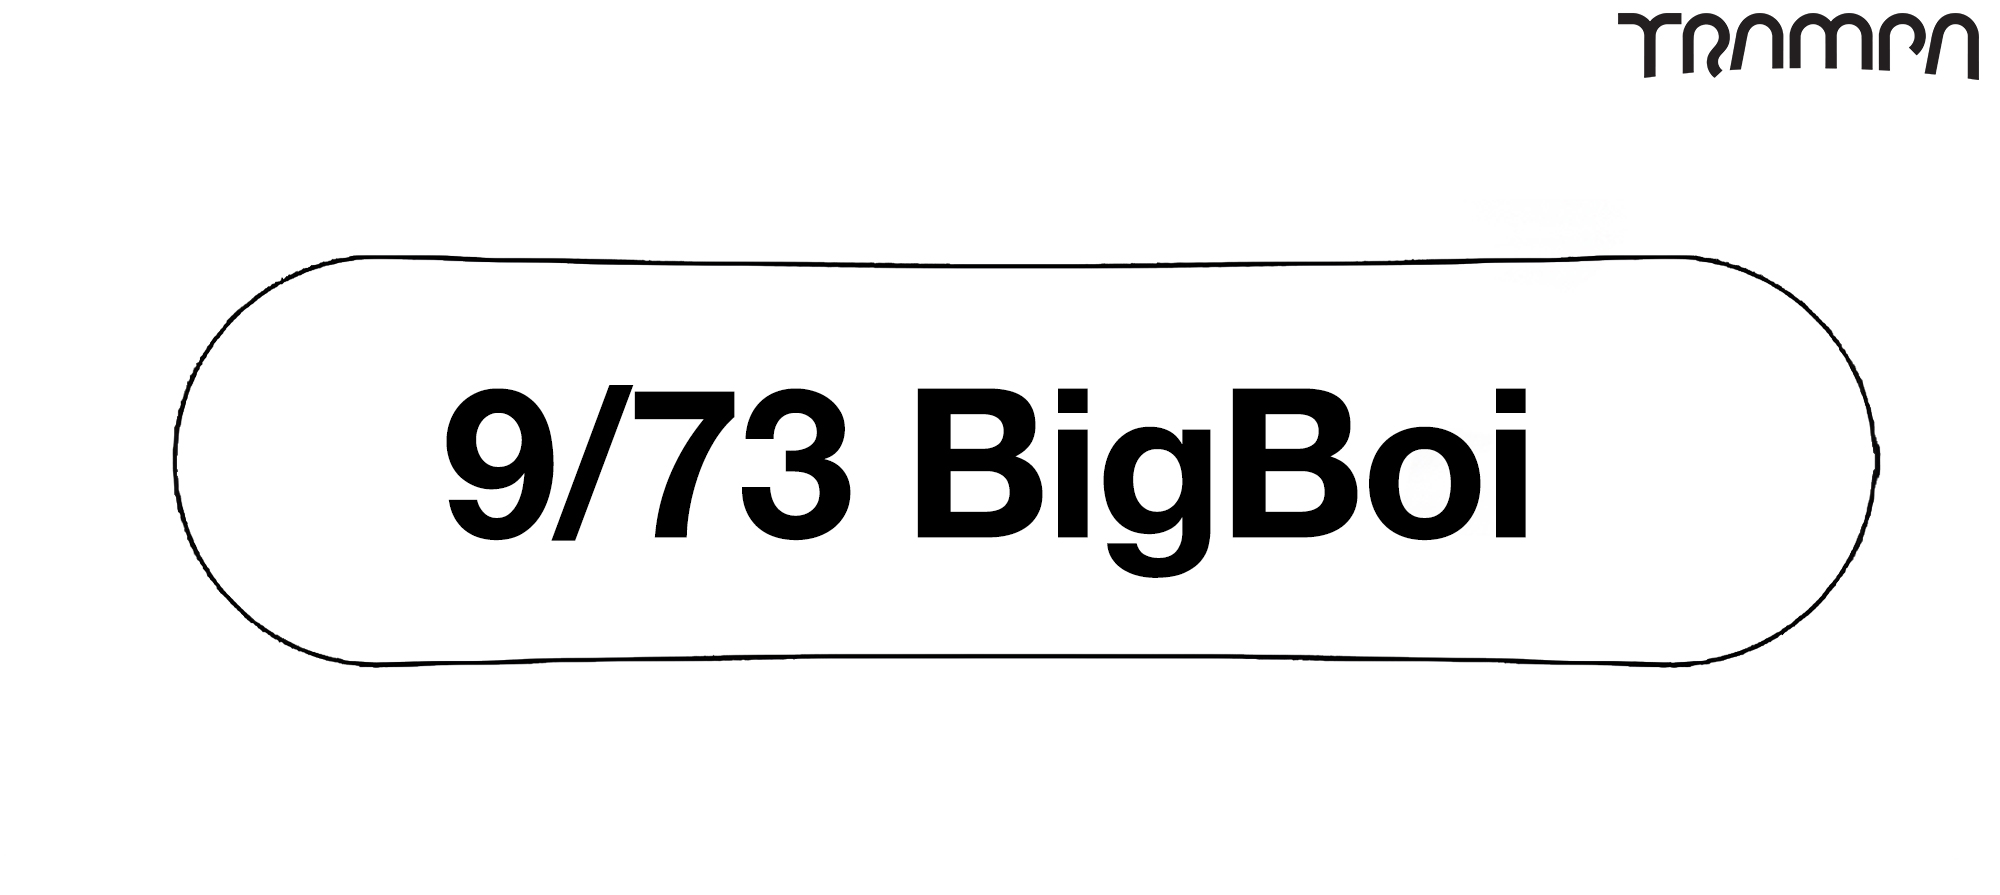 9/73 BigBoi 